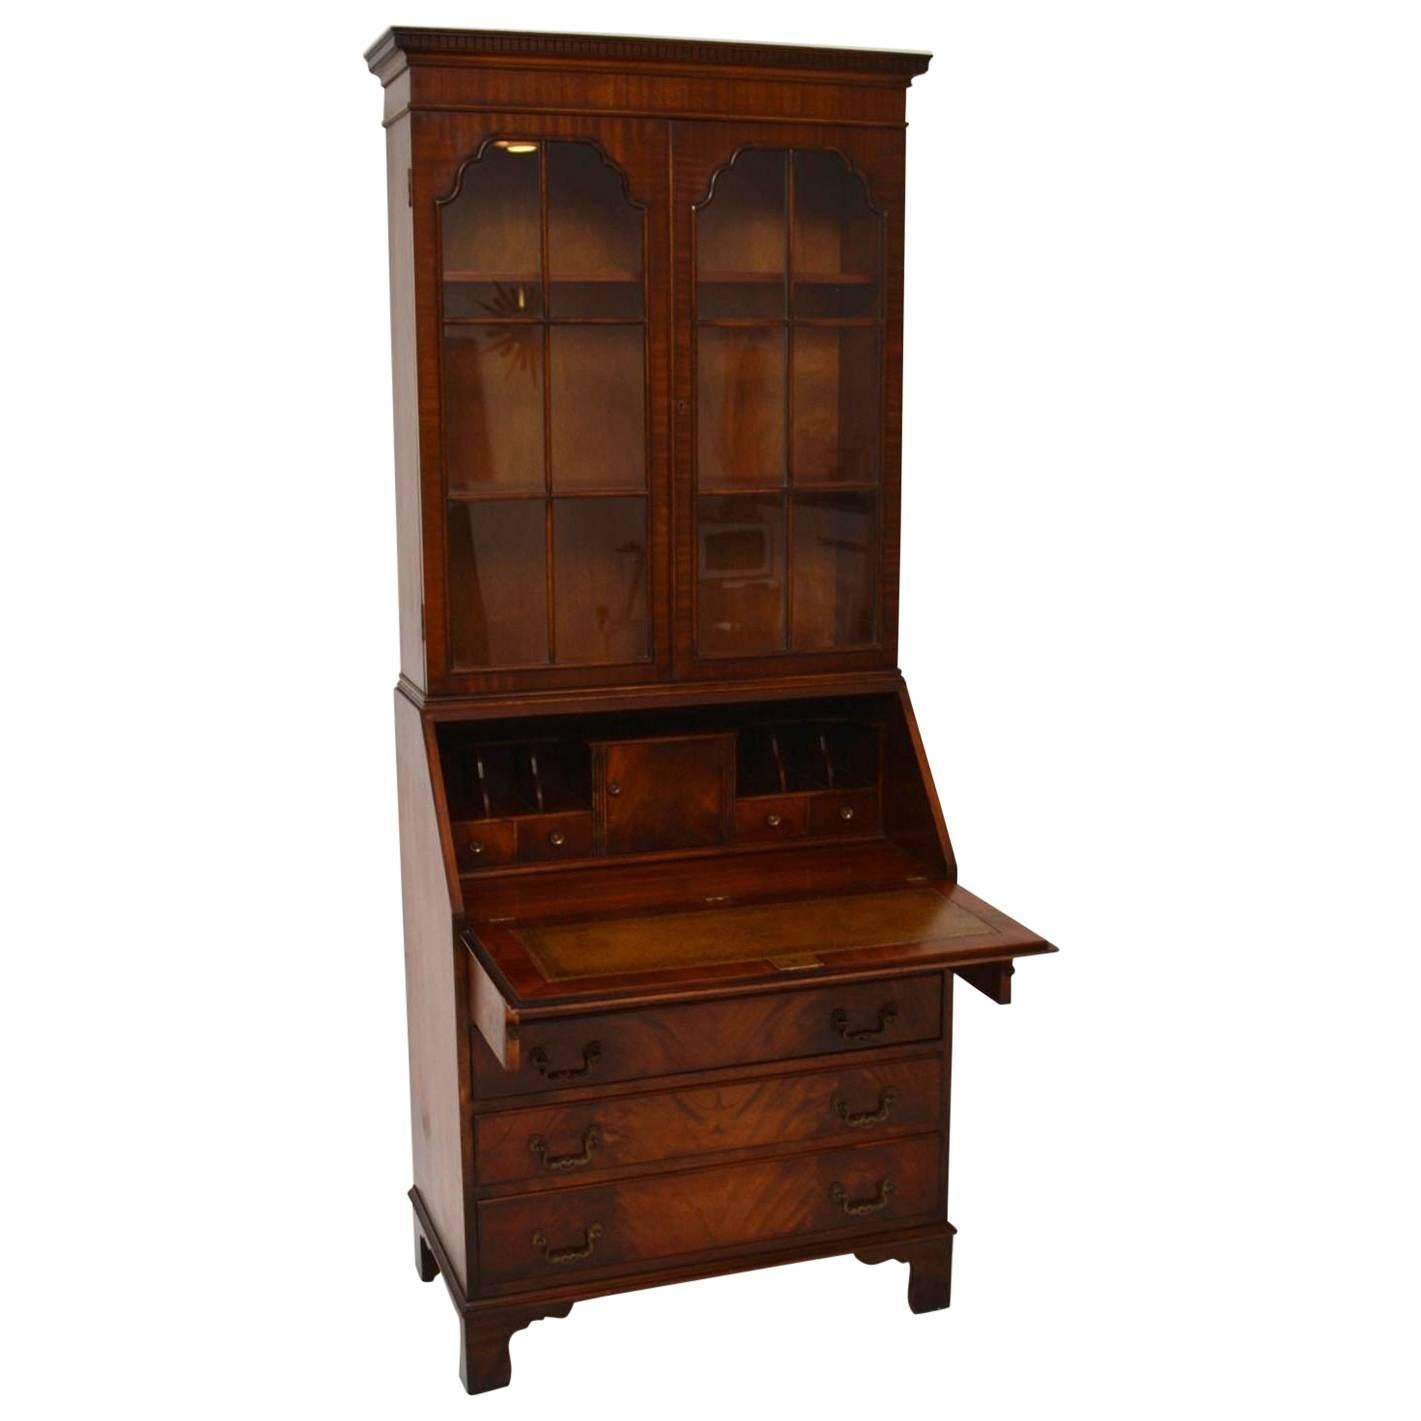 Antique Georgian Style Mahogany Bureau Bookcase